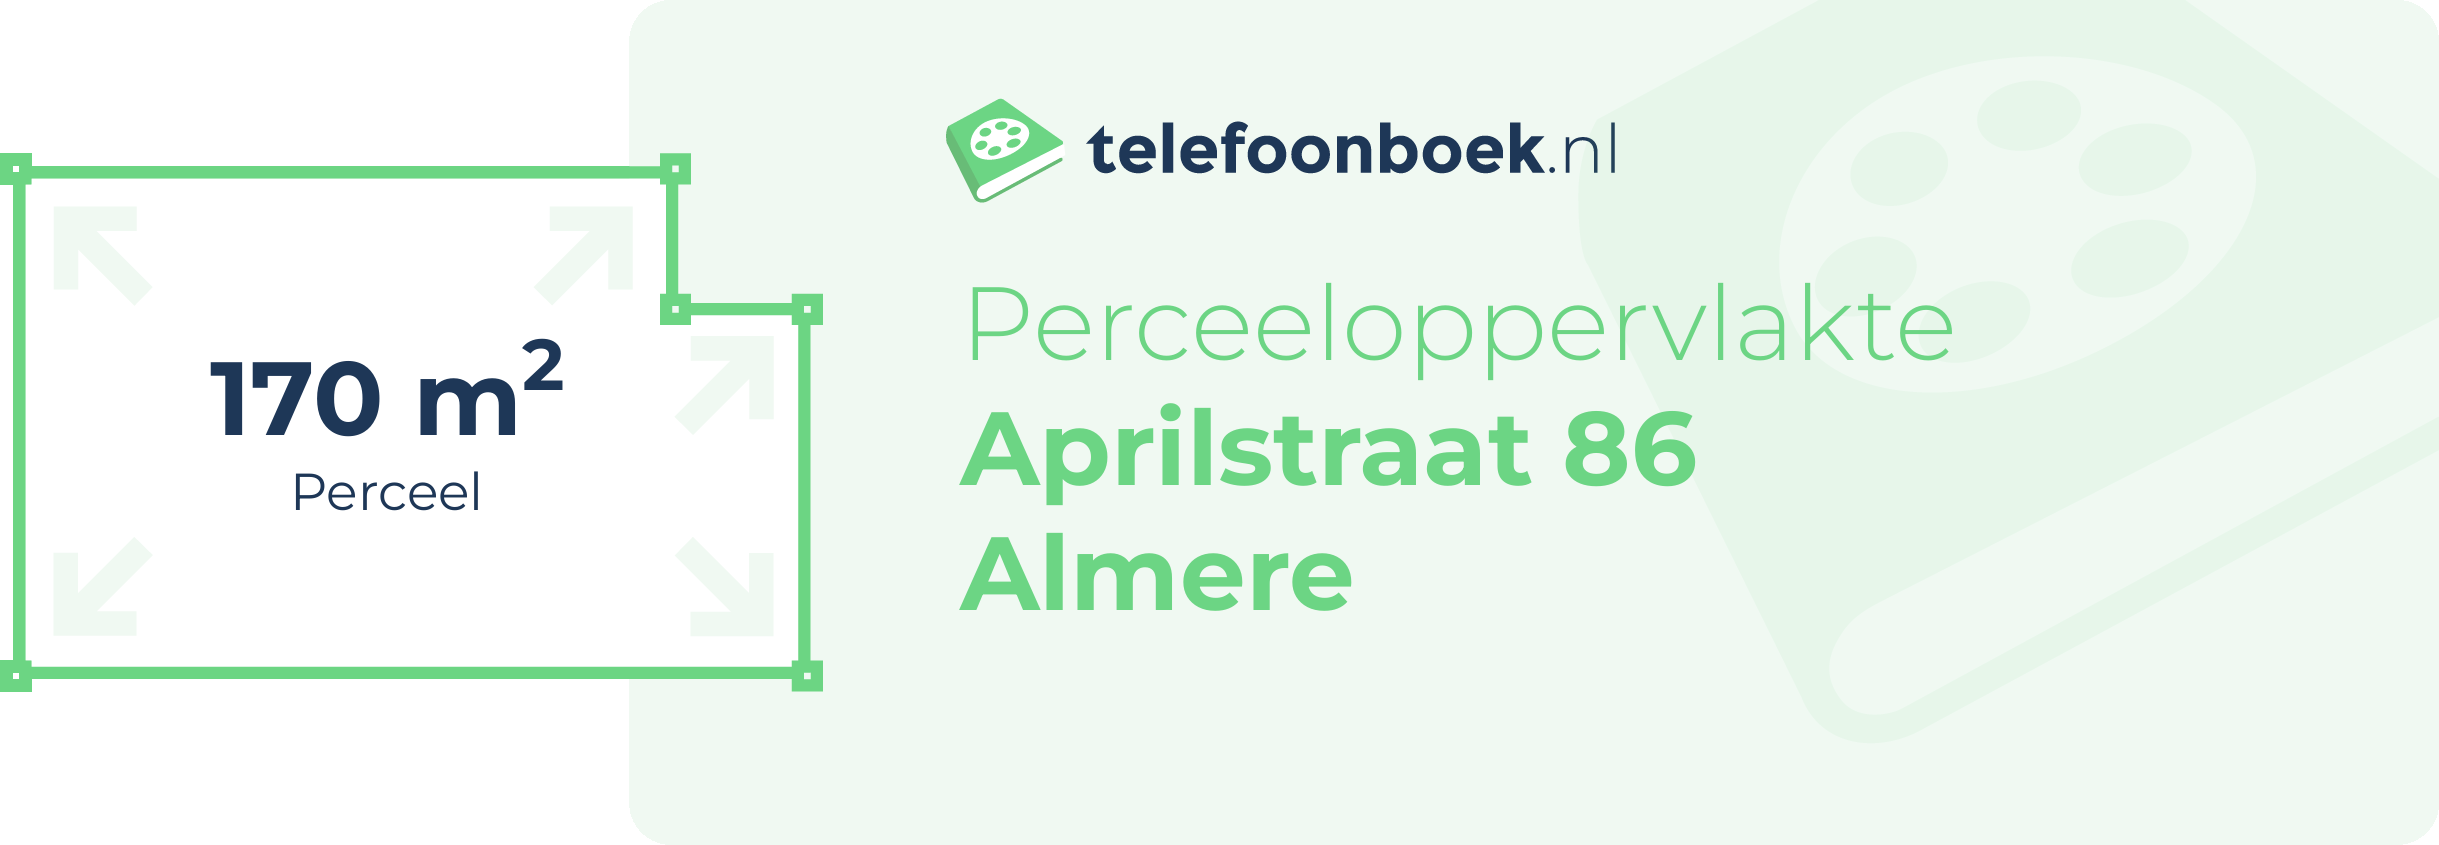 Perceeloppervlakte Aprilstraat 86 Almere